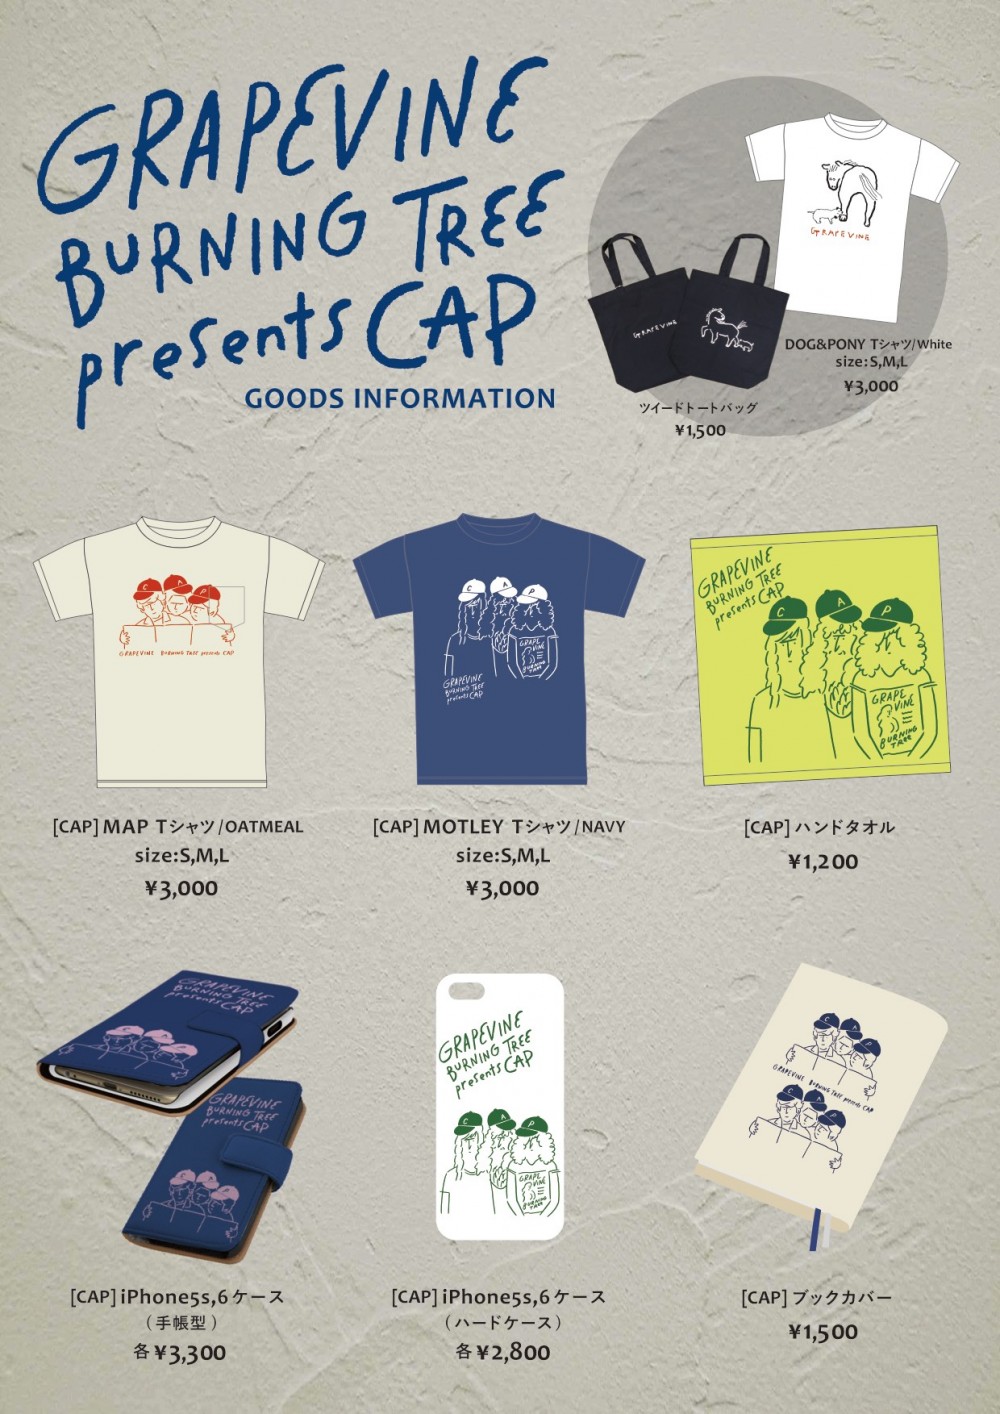 Burning tree presents CAP」オフィシャル・グッズ | GRAPEVINE ...